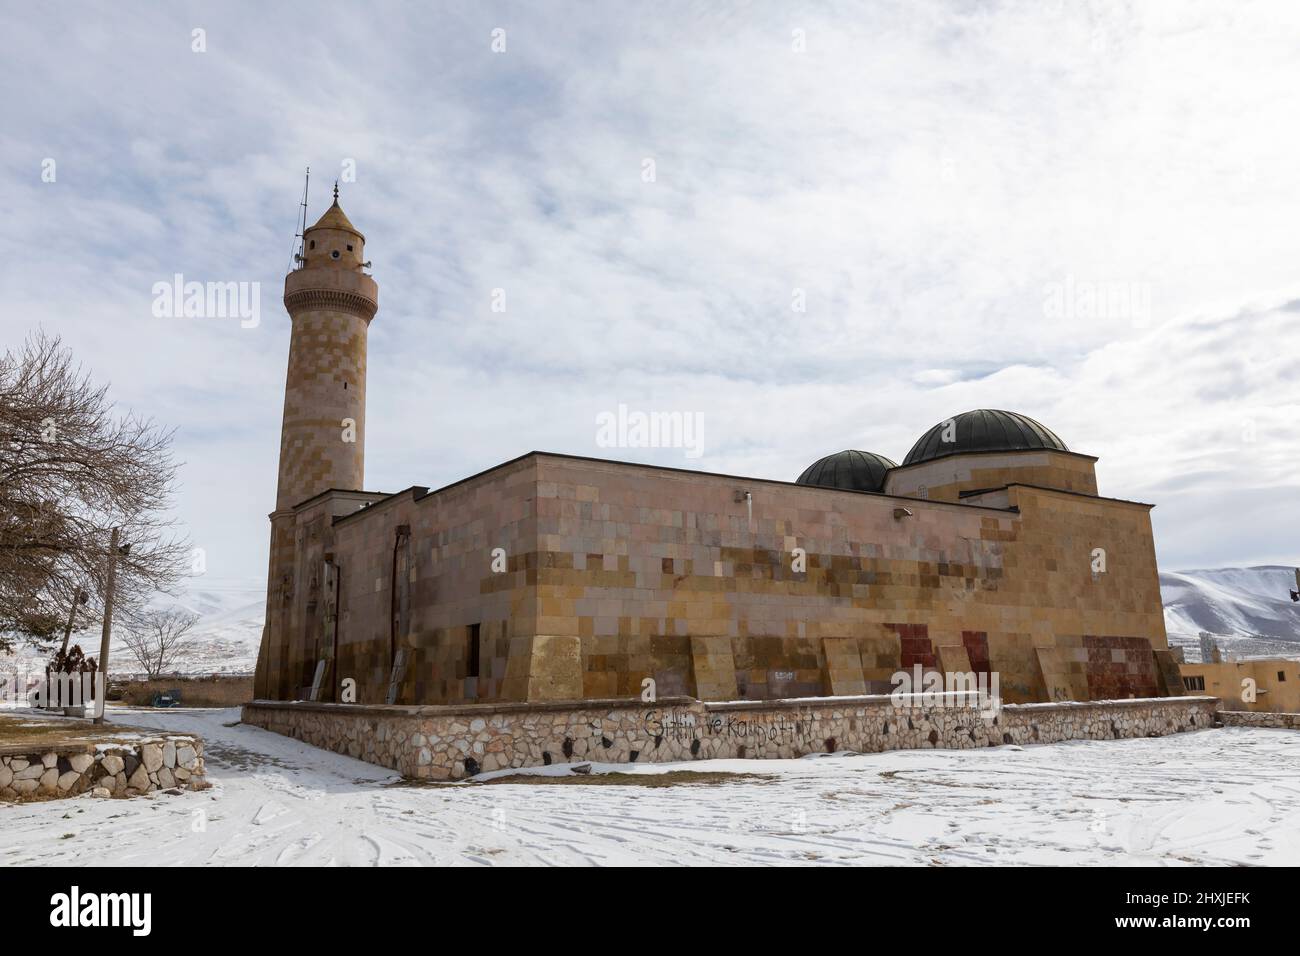 Alaeddin Mosque in Nigde City of Turkey Stock Photo